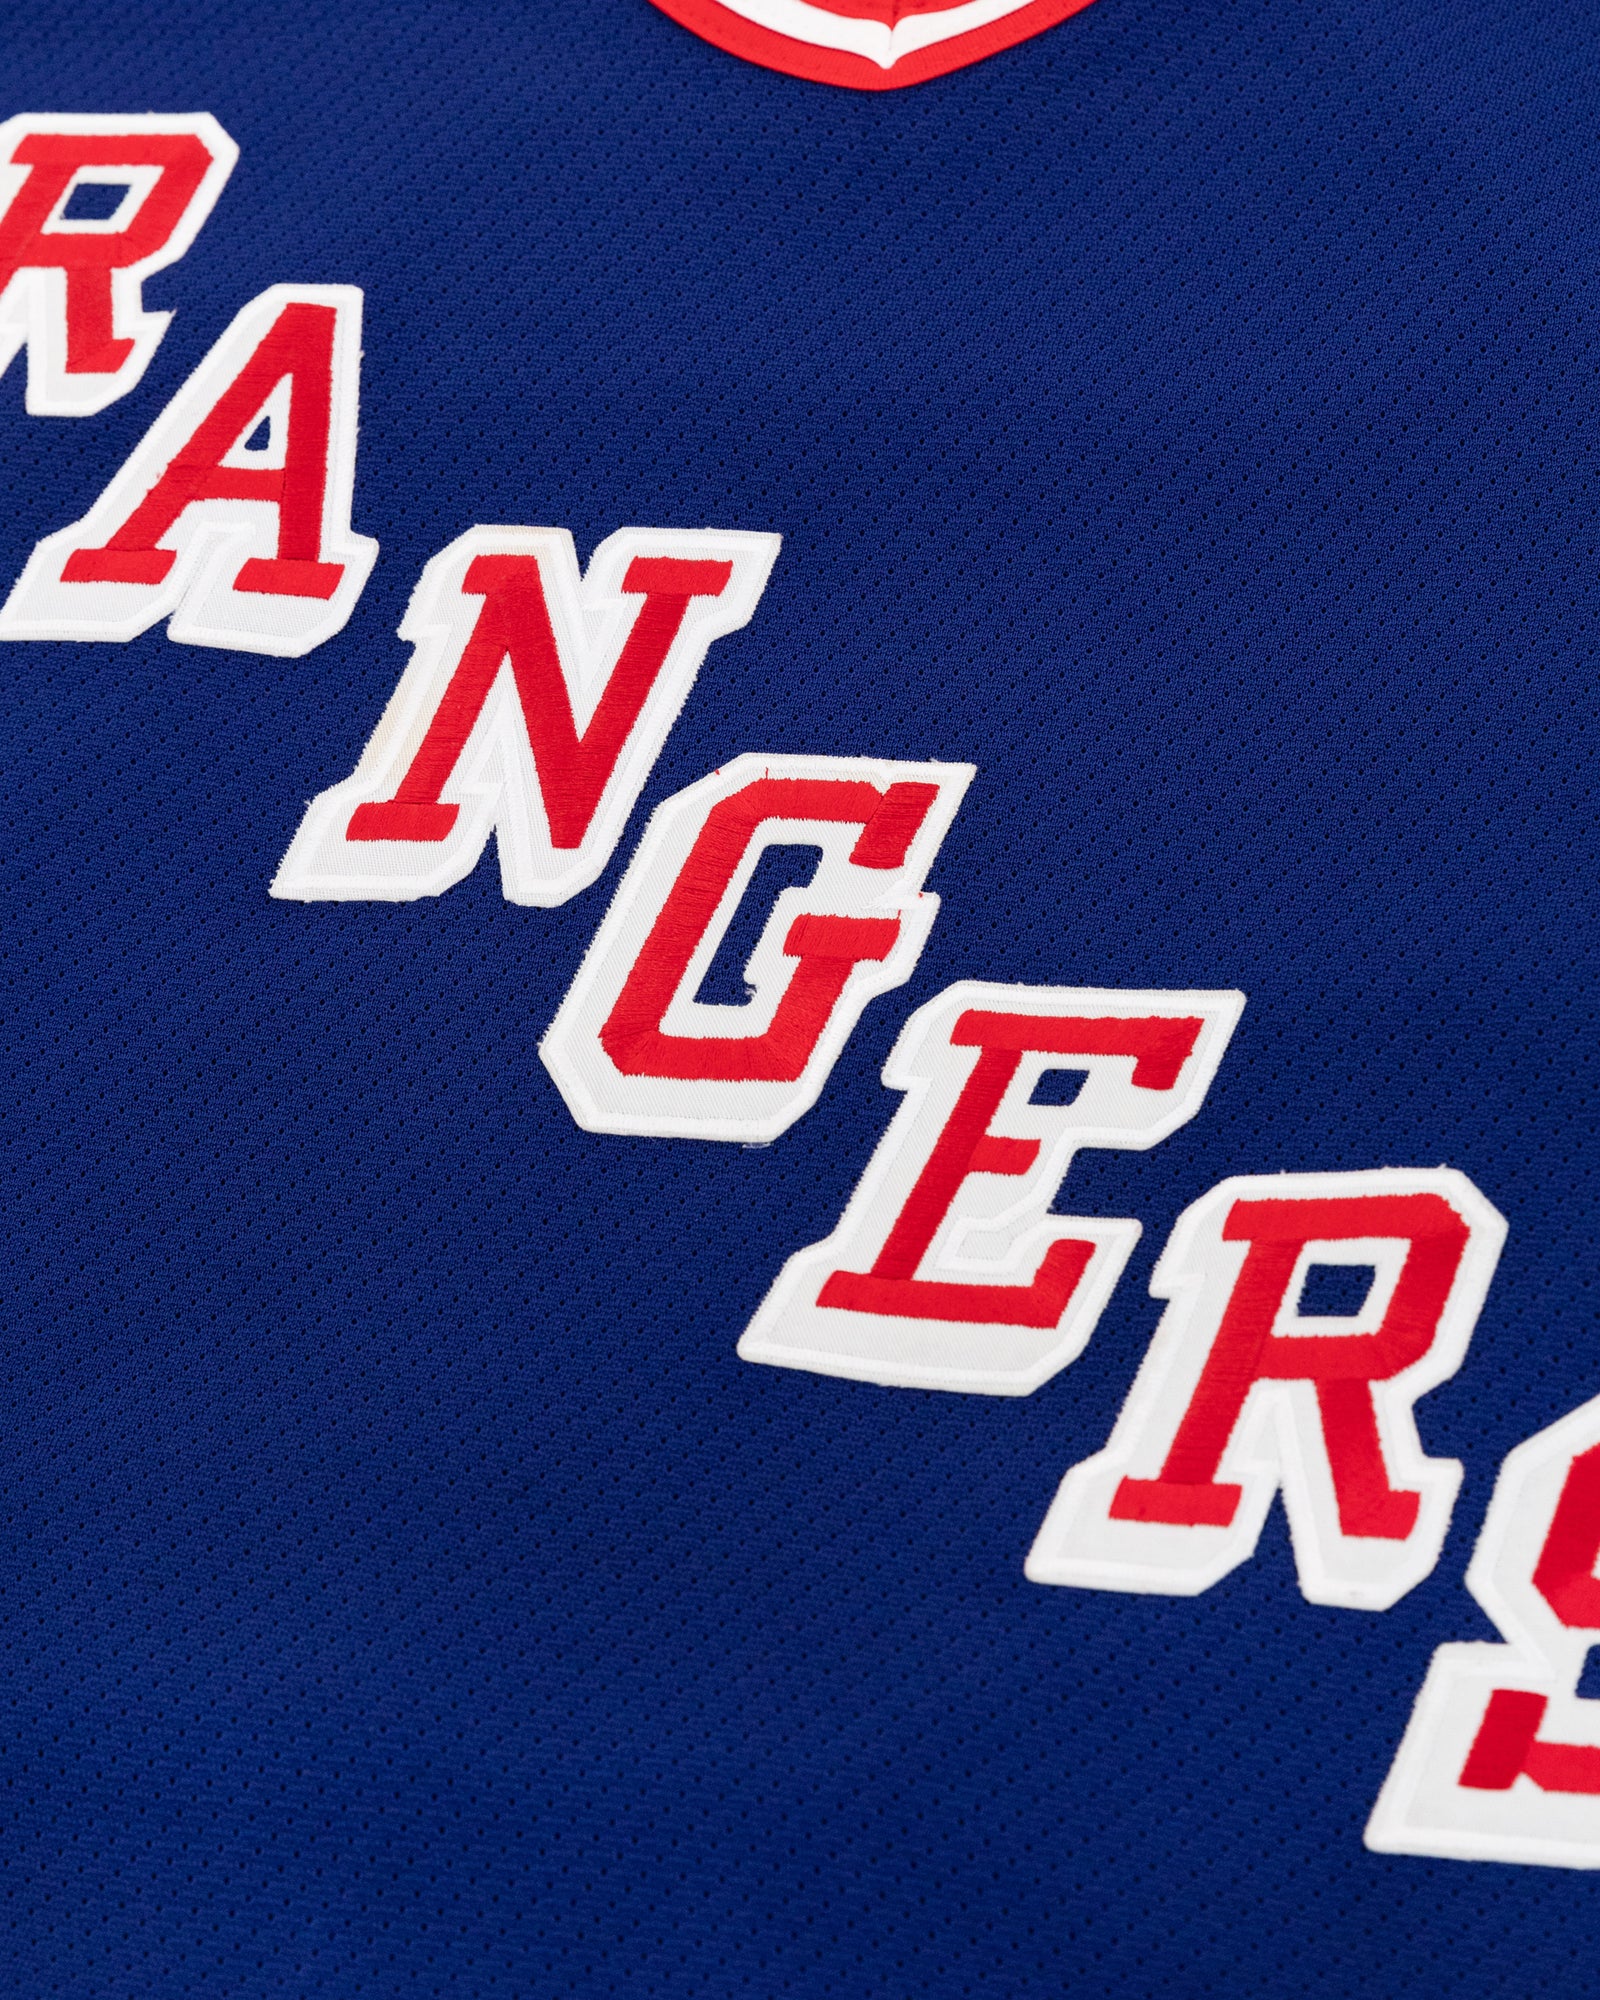 New York Rangers Alternate Logo by SillyGoose